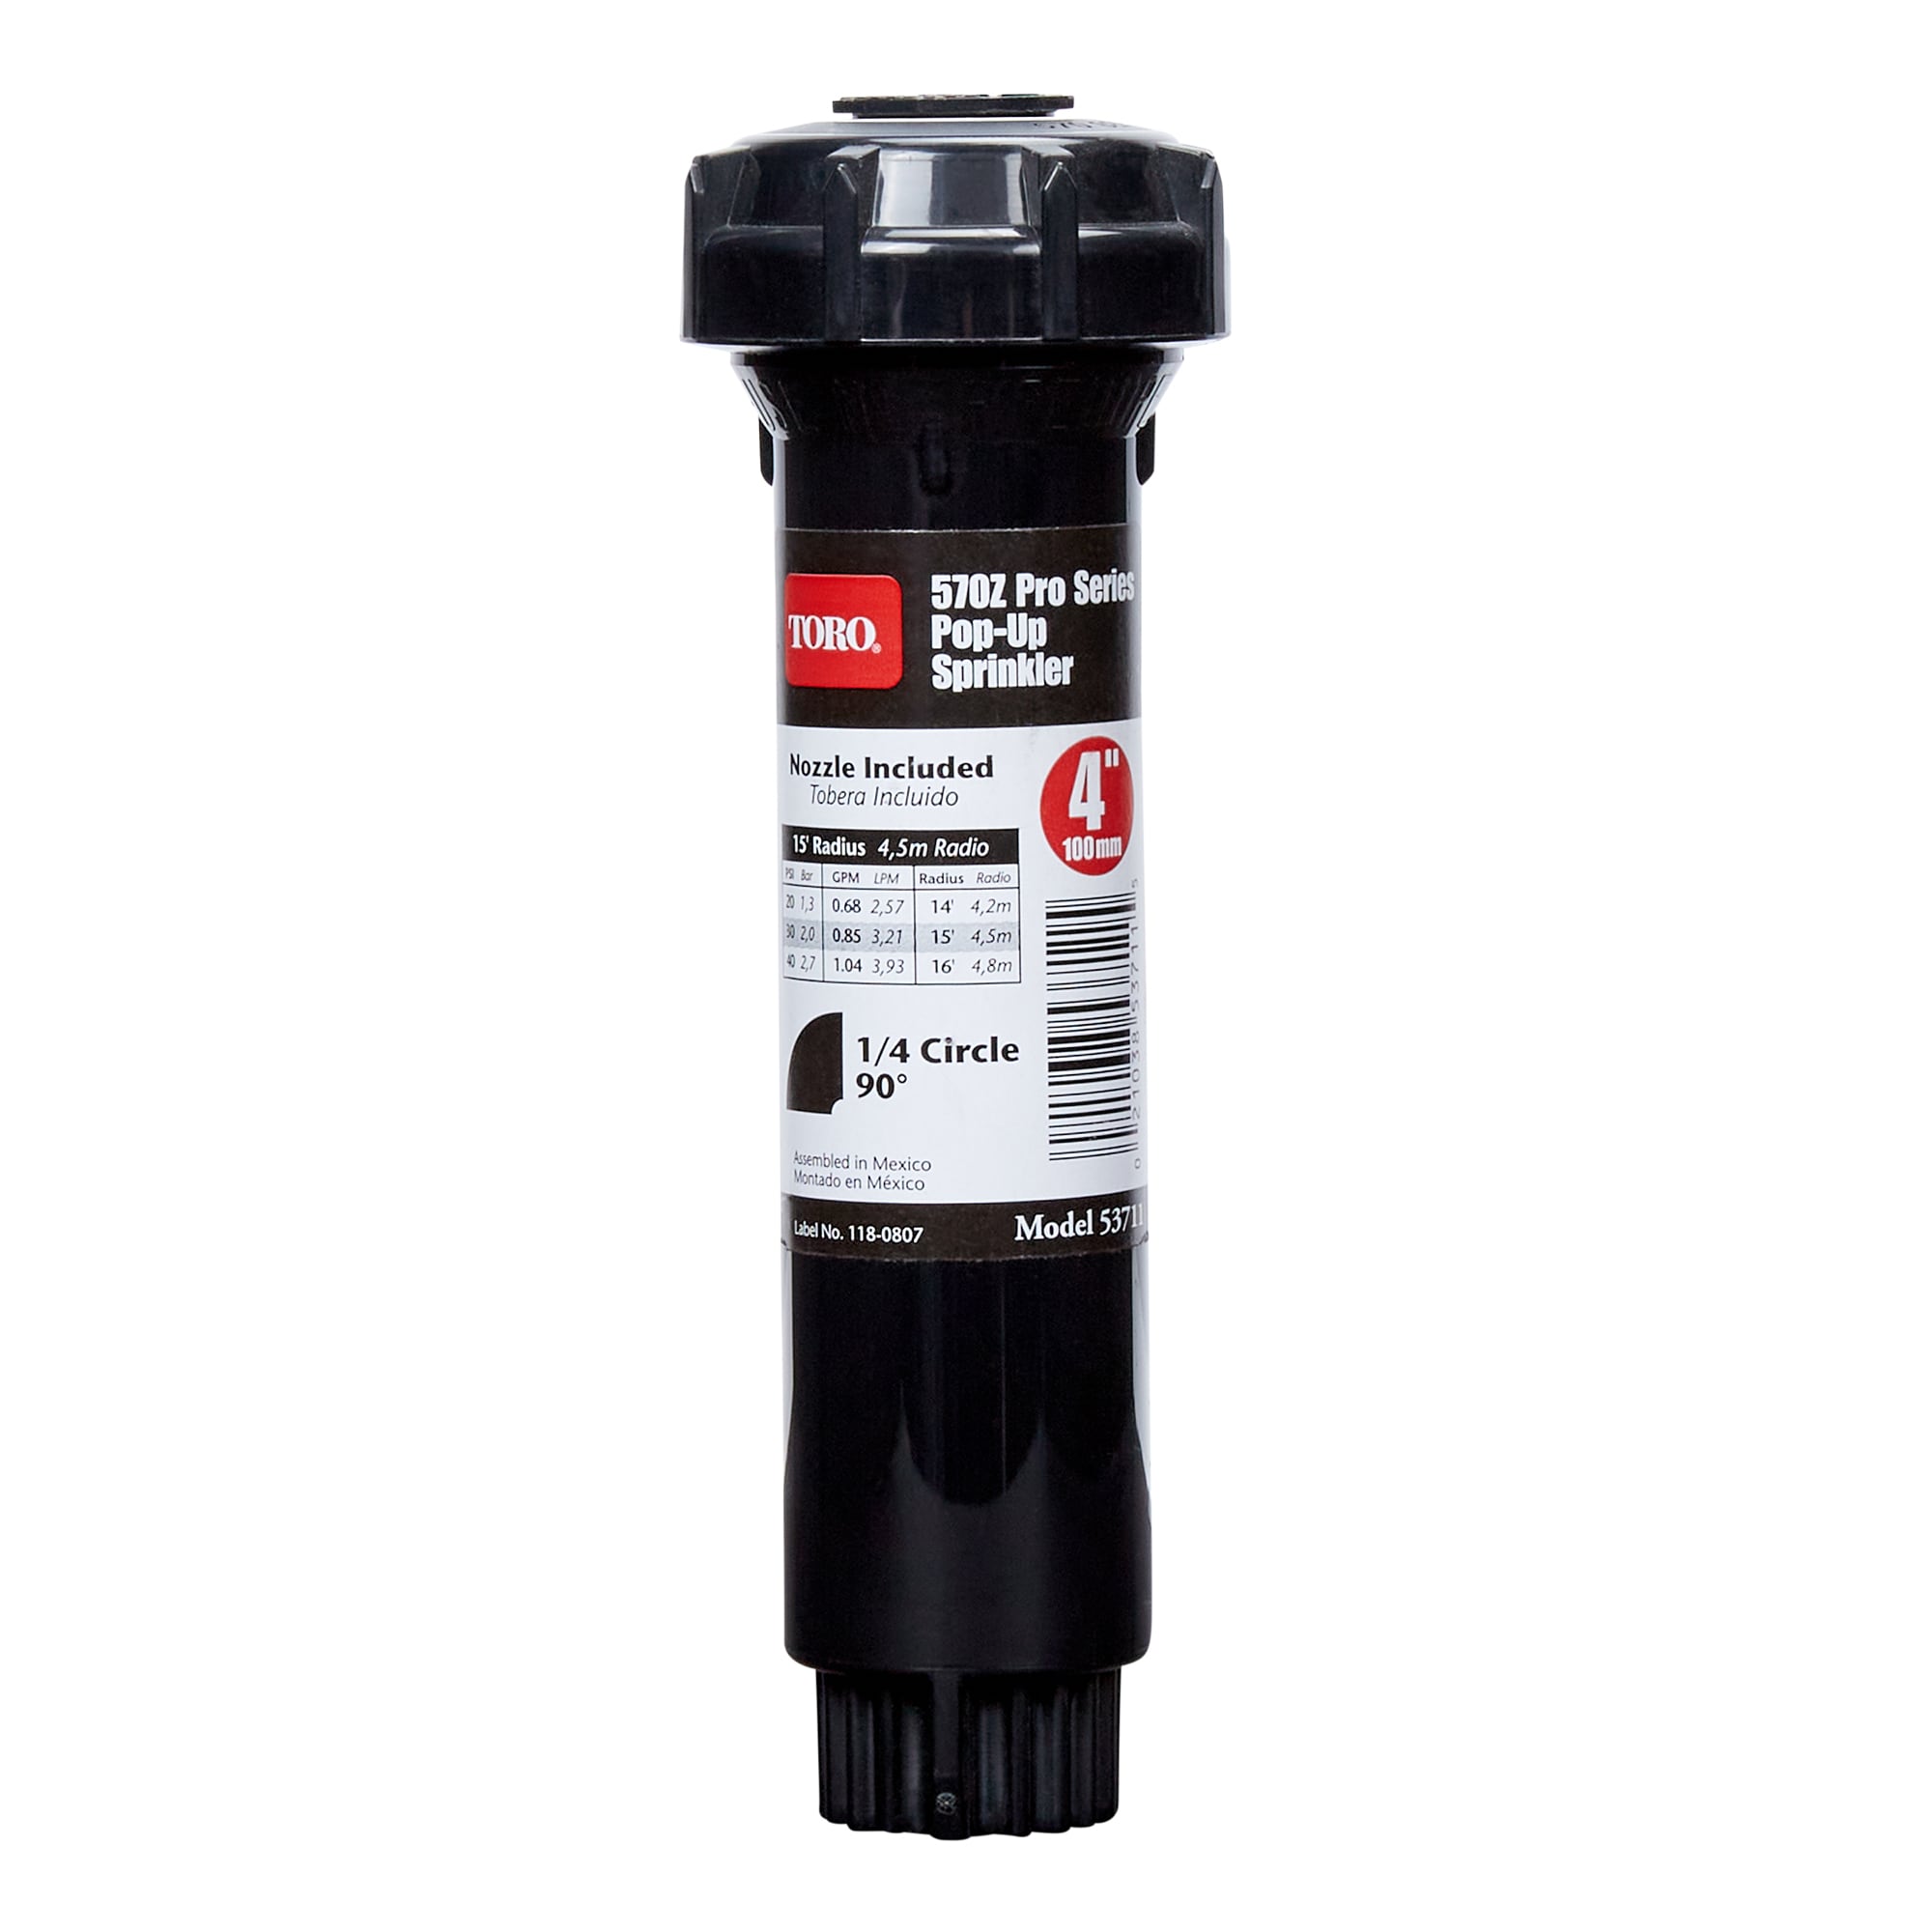 Black 570 Series 3 15 Quarter Nozzle Pop-Up Sprinkler Toro 53461 5-Pack 